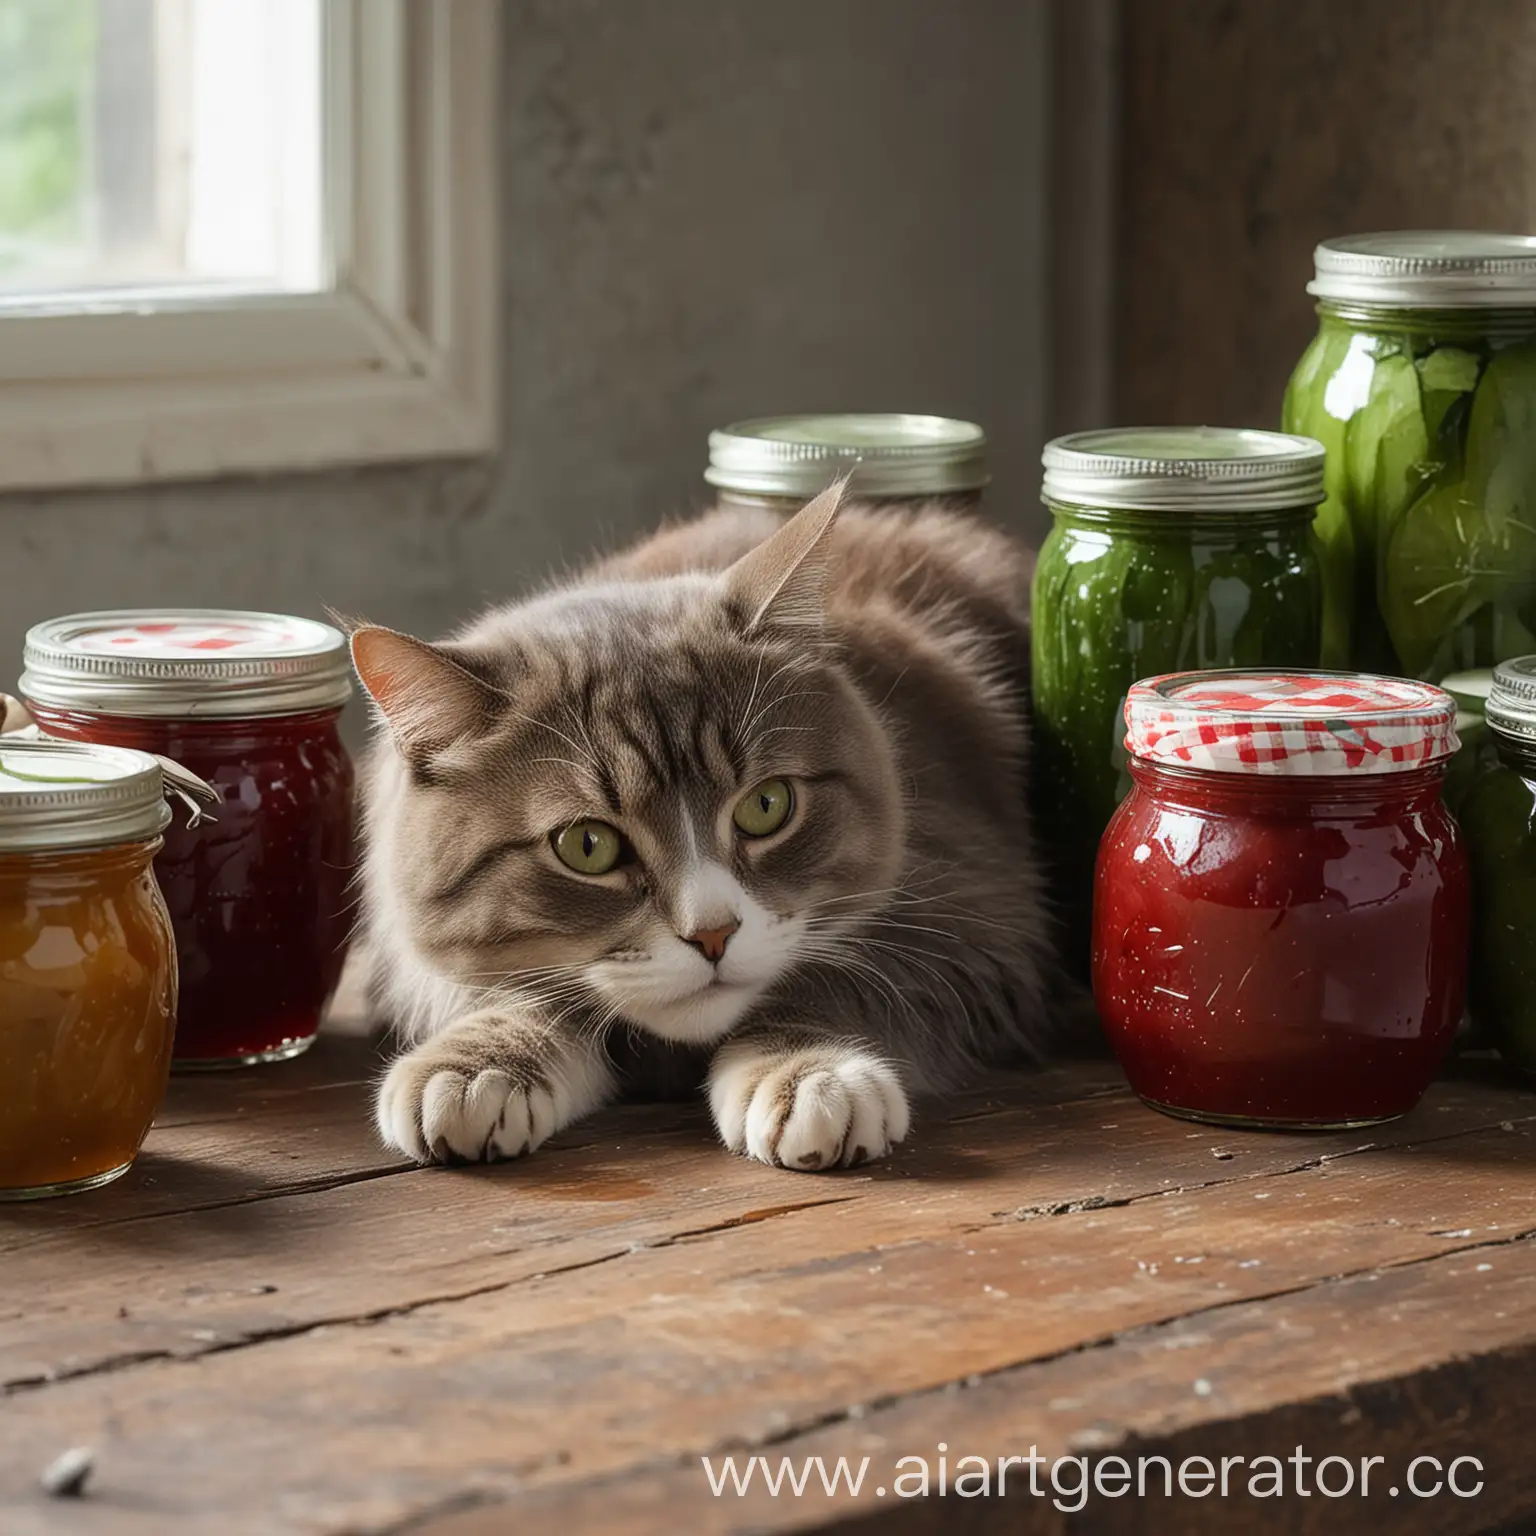 the cat lies next to jars of jam, cucumbers